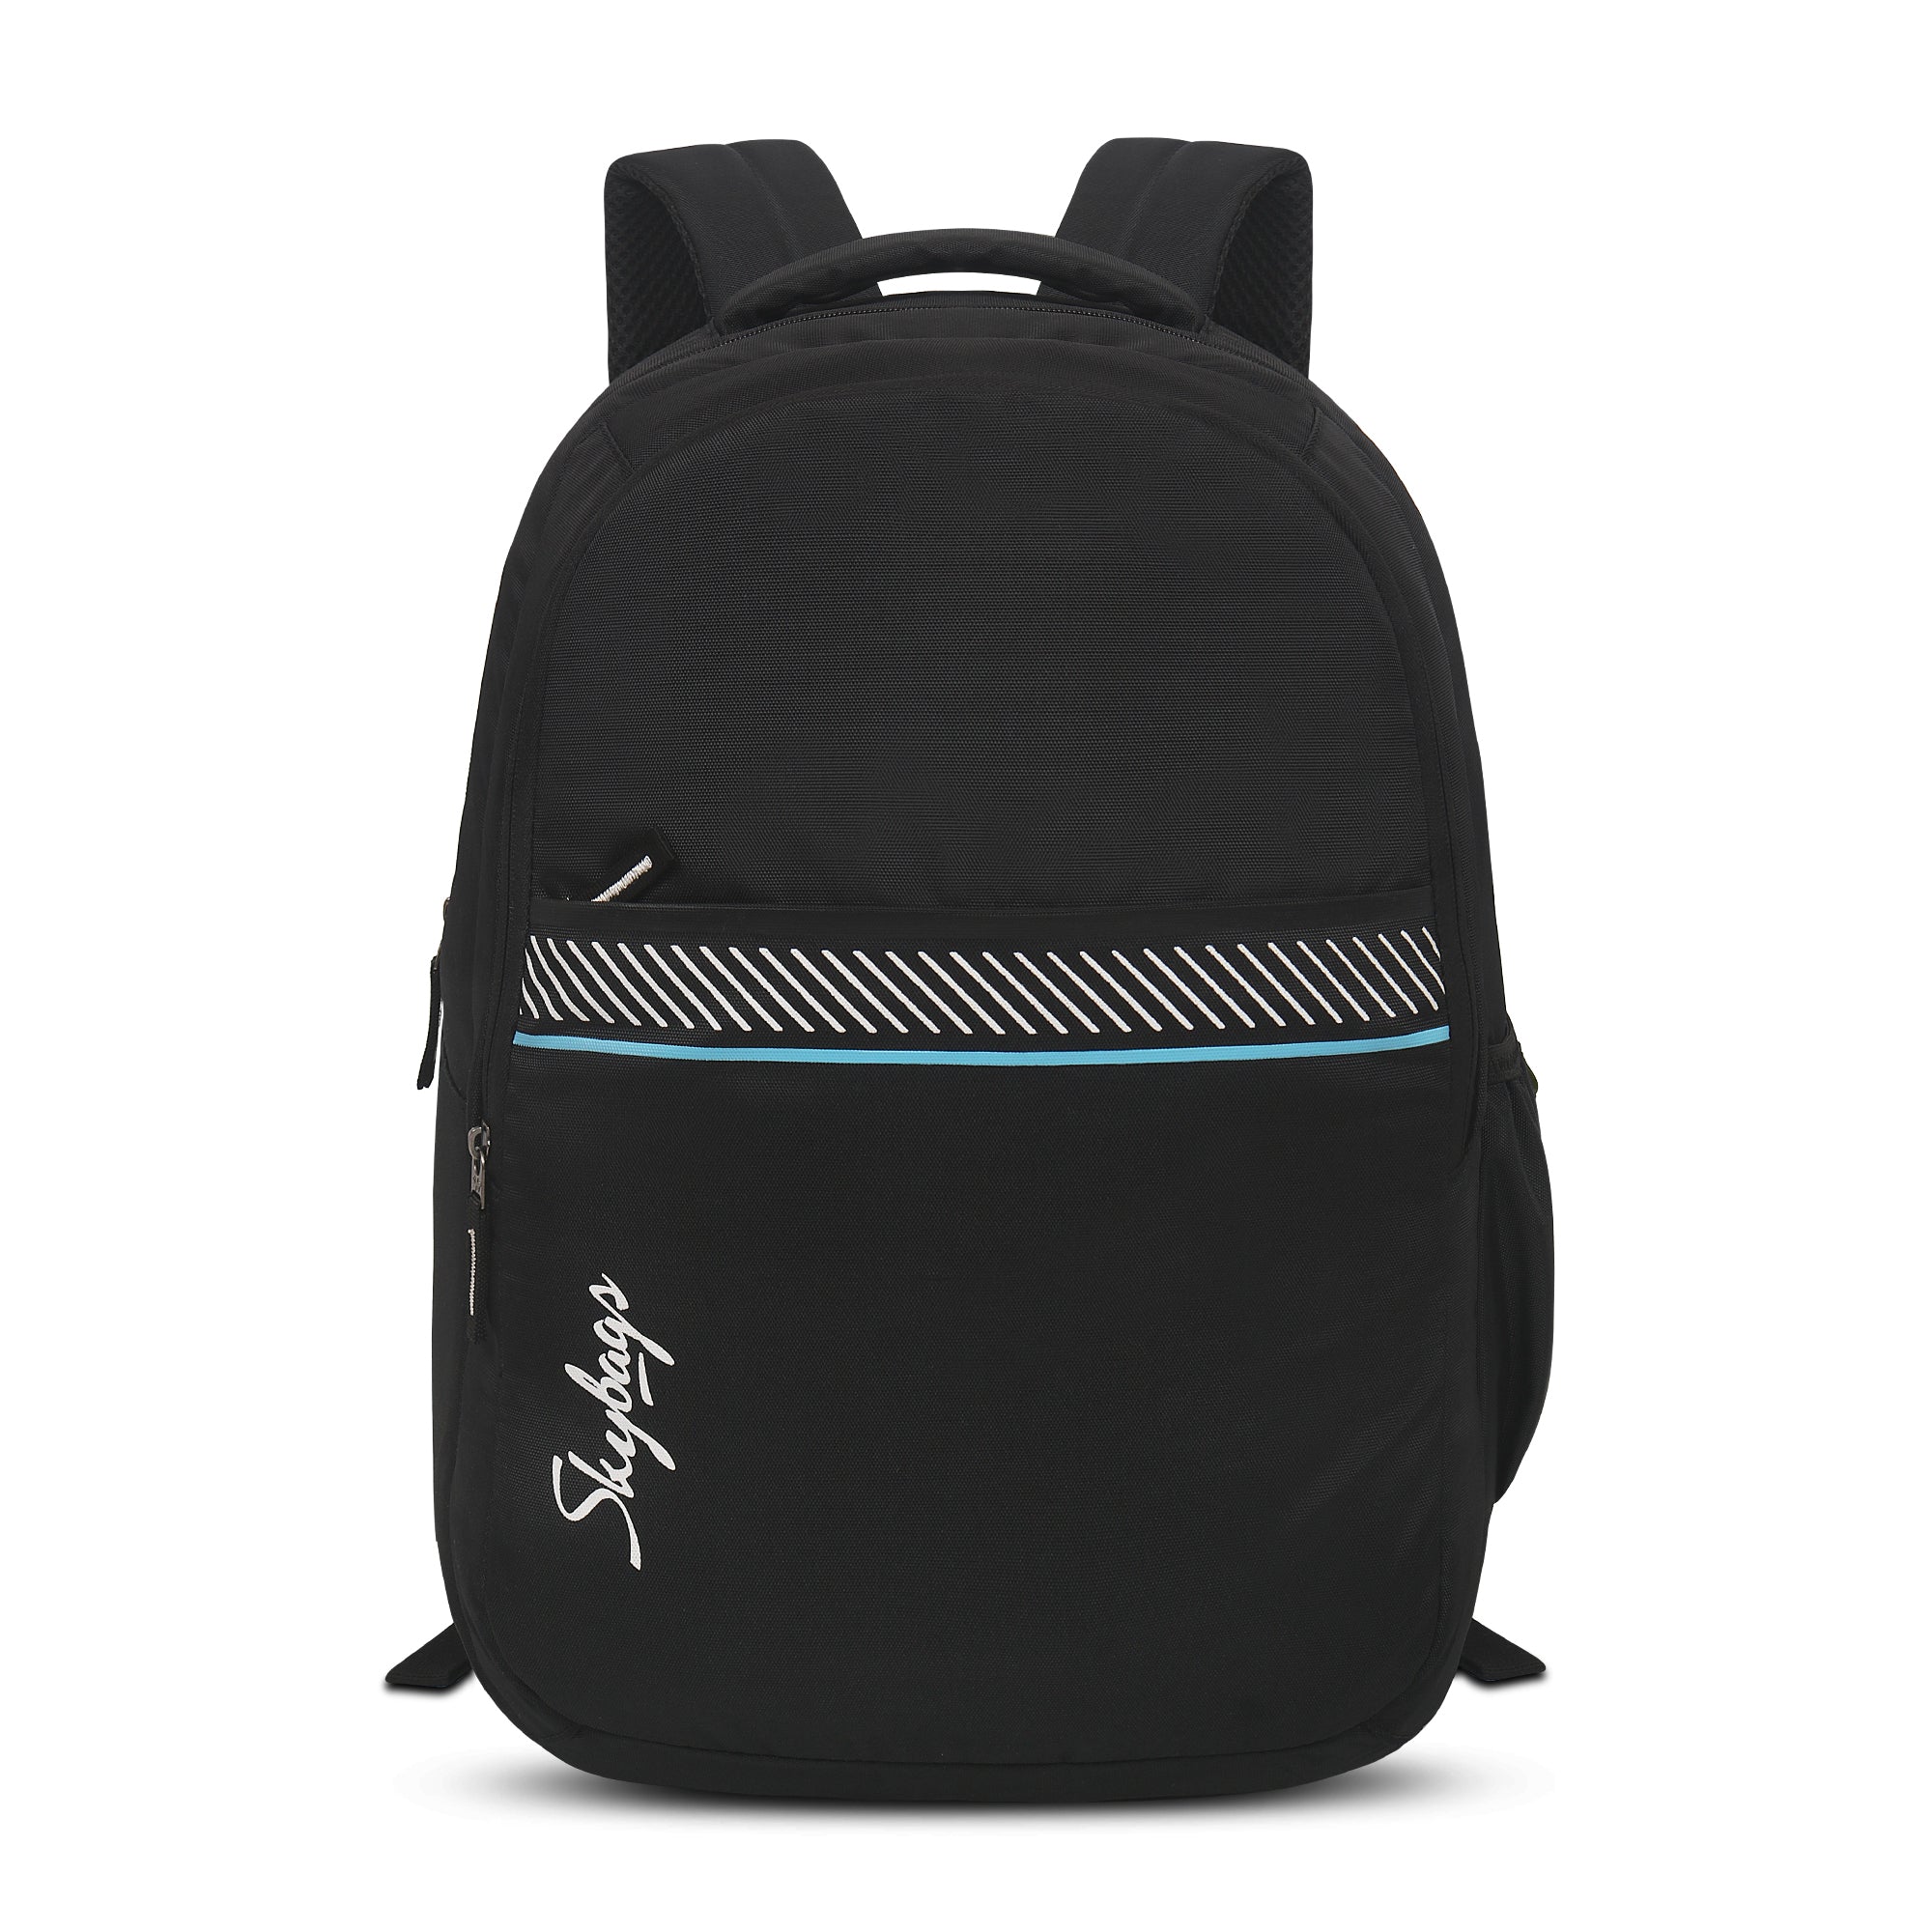 SKYBAGS CREW 06 SCHOOL BAG (E) PURPLE 33 L Laptop Backpack Purple